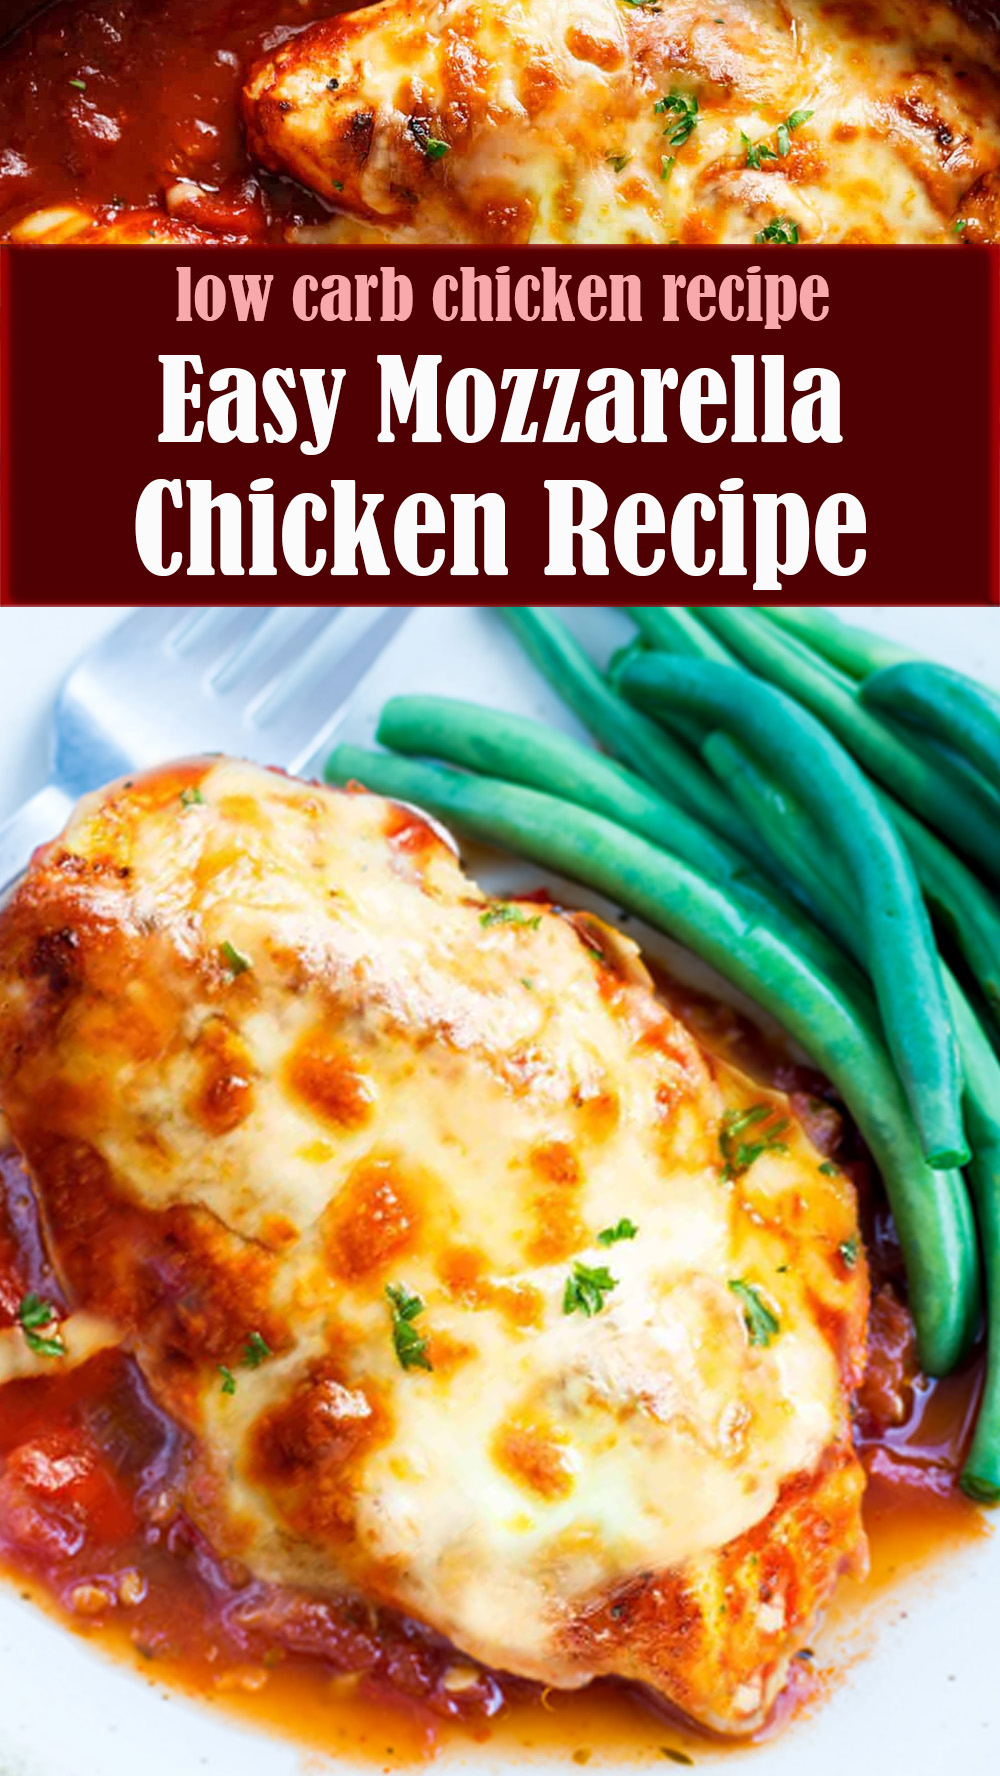 Easy Mozzarella Chicken Recipe